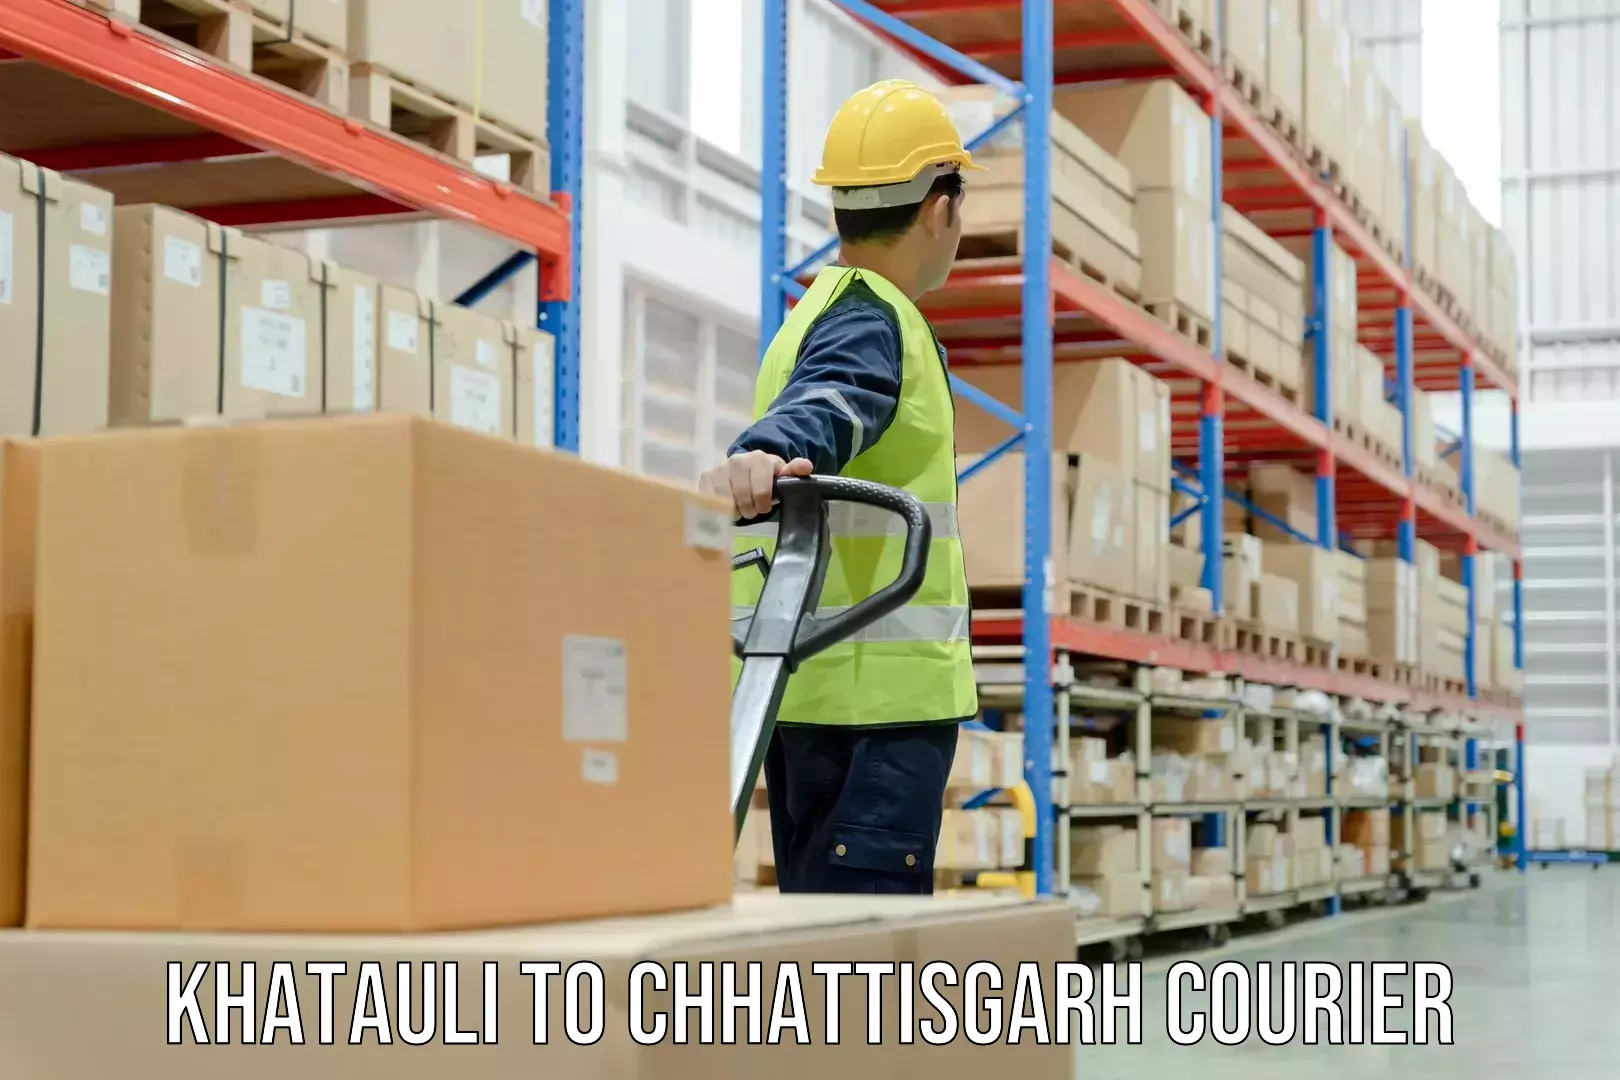 Courier service innovation Khatauli to Durg